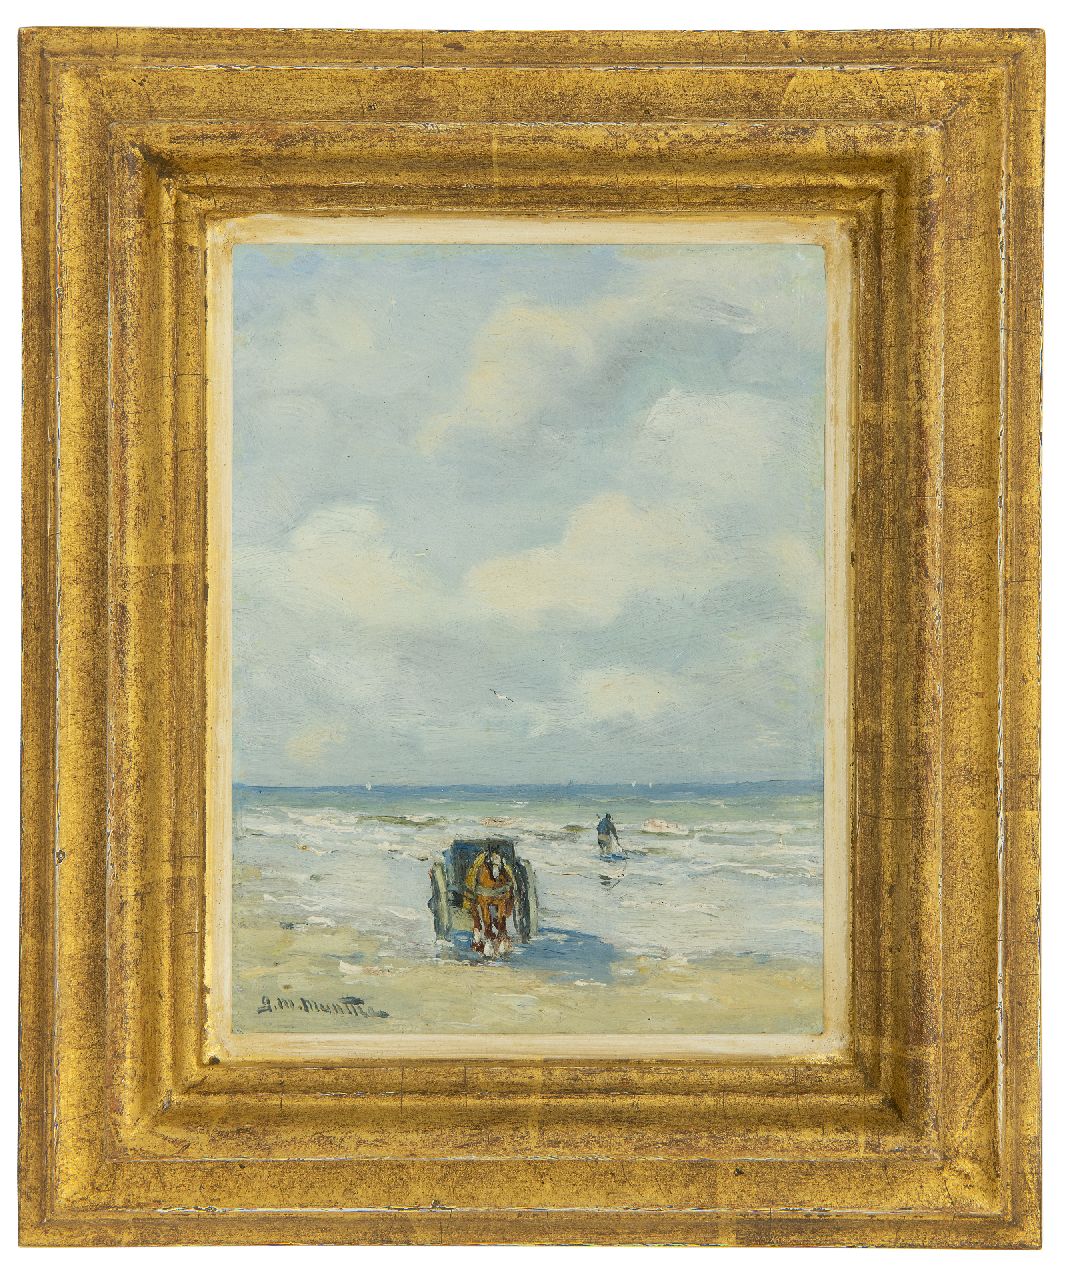 Munthe G.A.L.  | Gerhard Arij Ludwig 'Morgenstjerne' Munthe, Fishing mussels in the surf, oil on painter's board 19.9 x 14.9 cm, signed l.l.